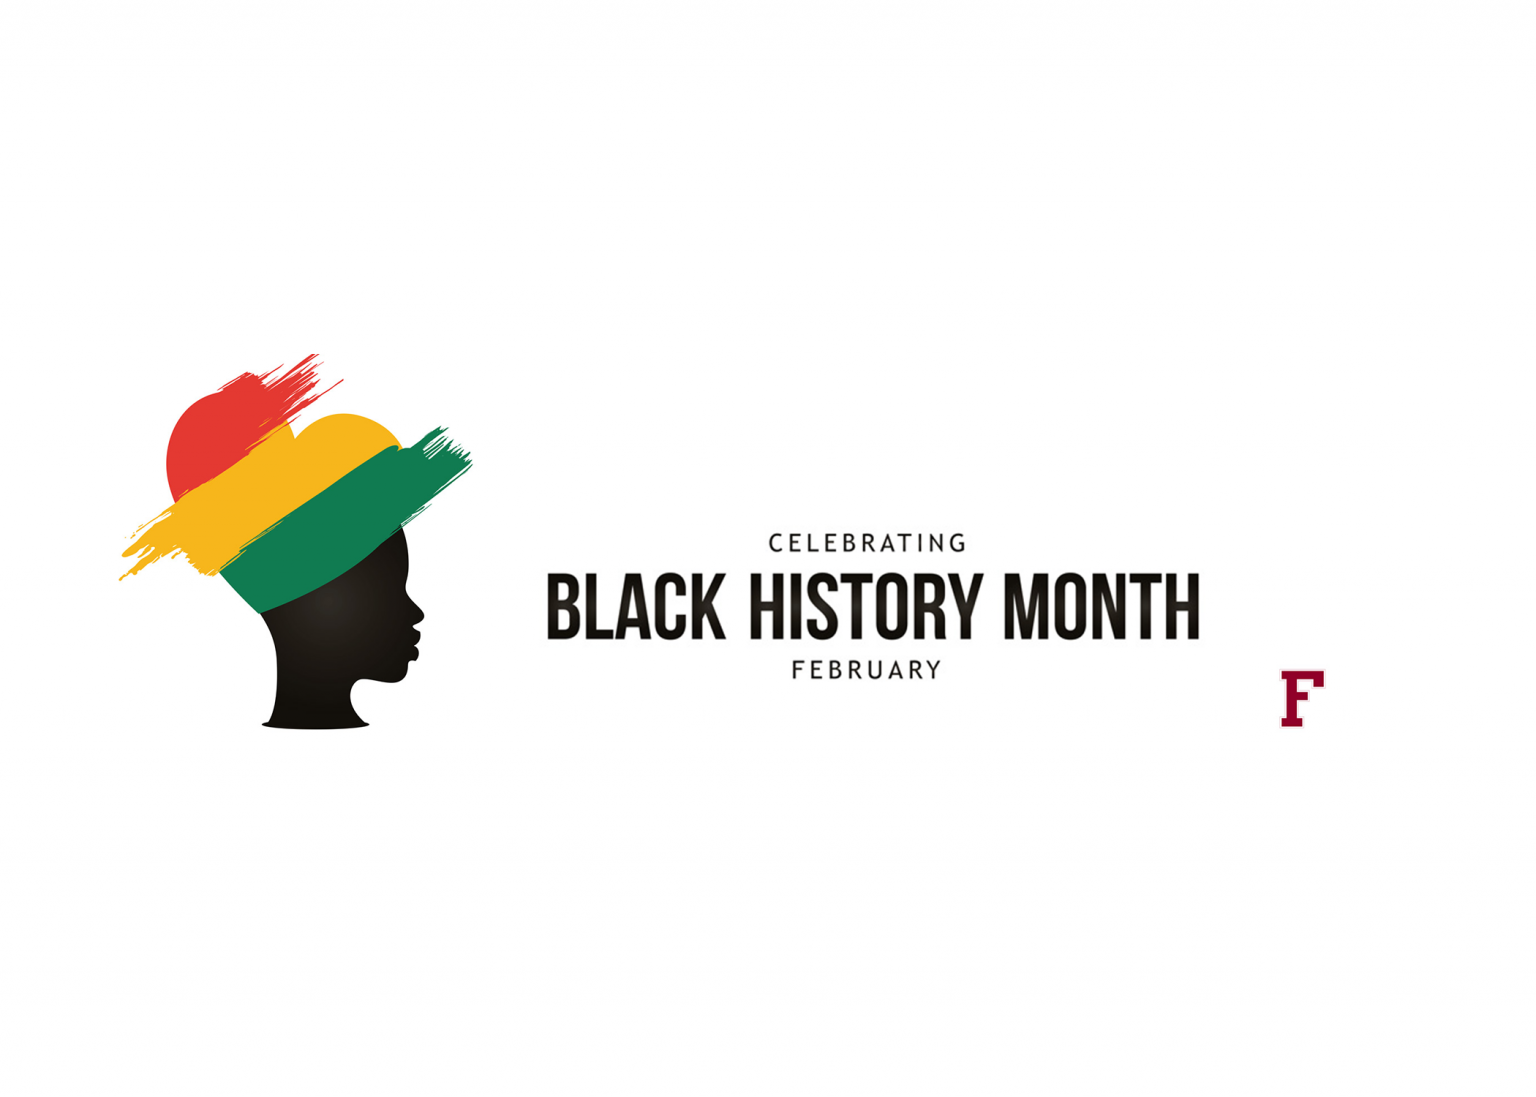 Celebrating Black History Month February